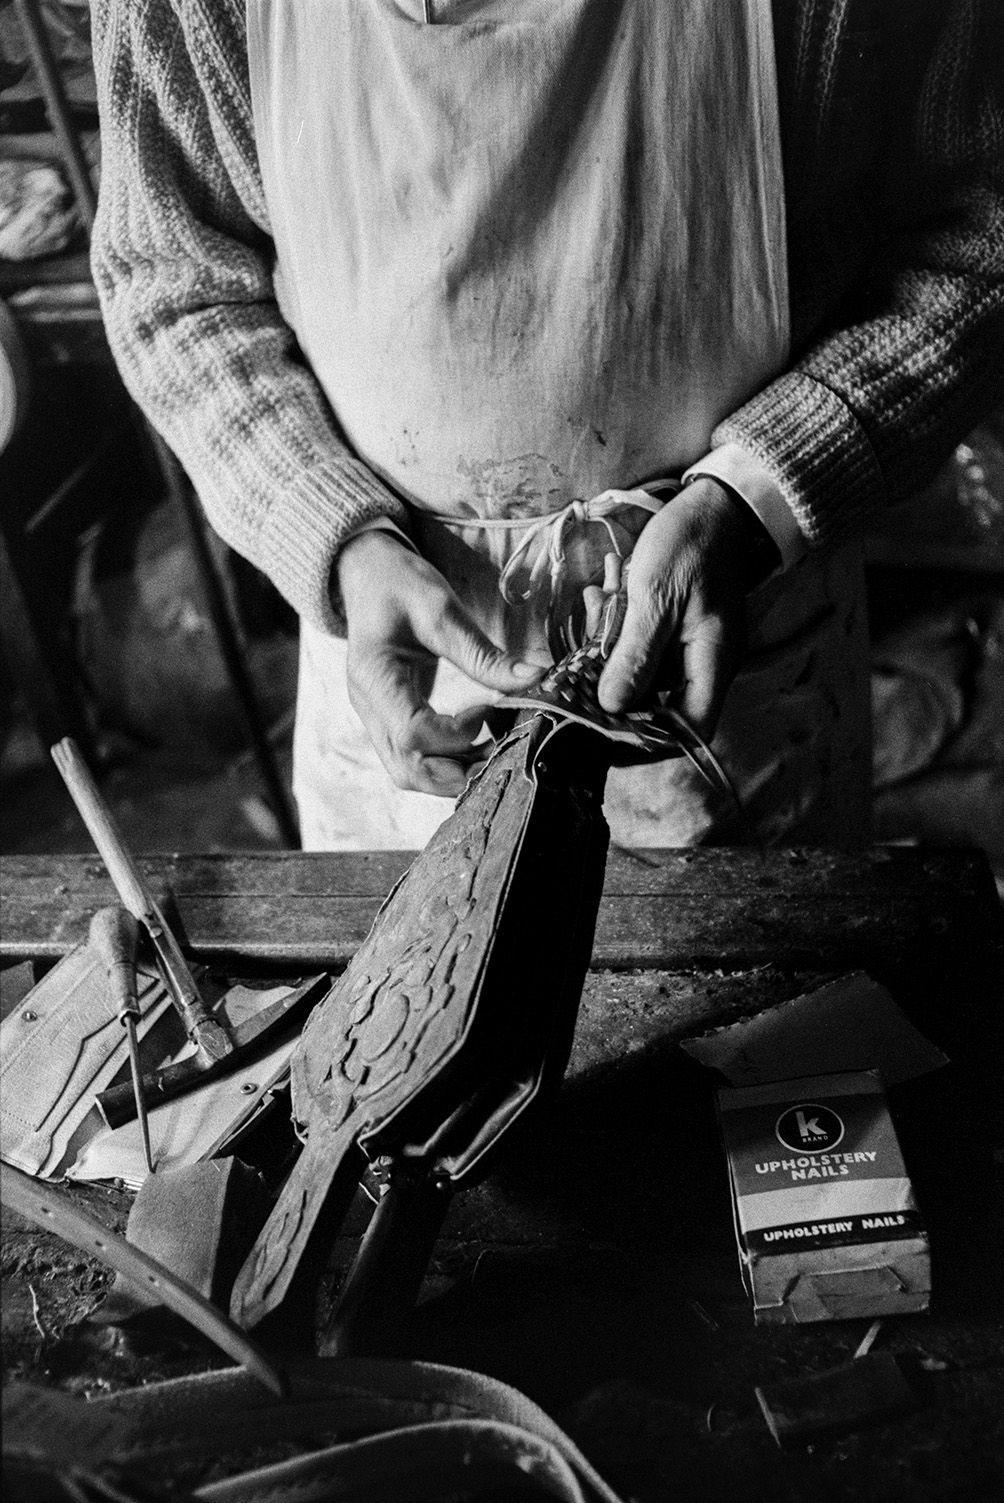 Derek Johns working on a small pair of bellows in his saddlery workshop in Bideford.